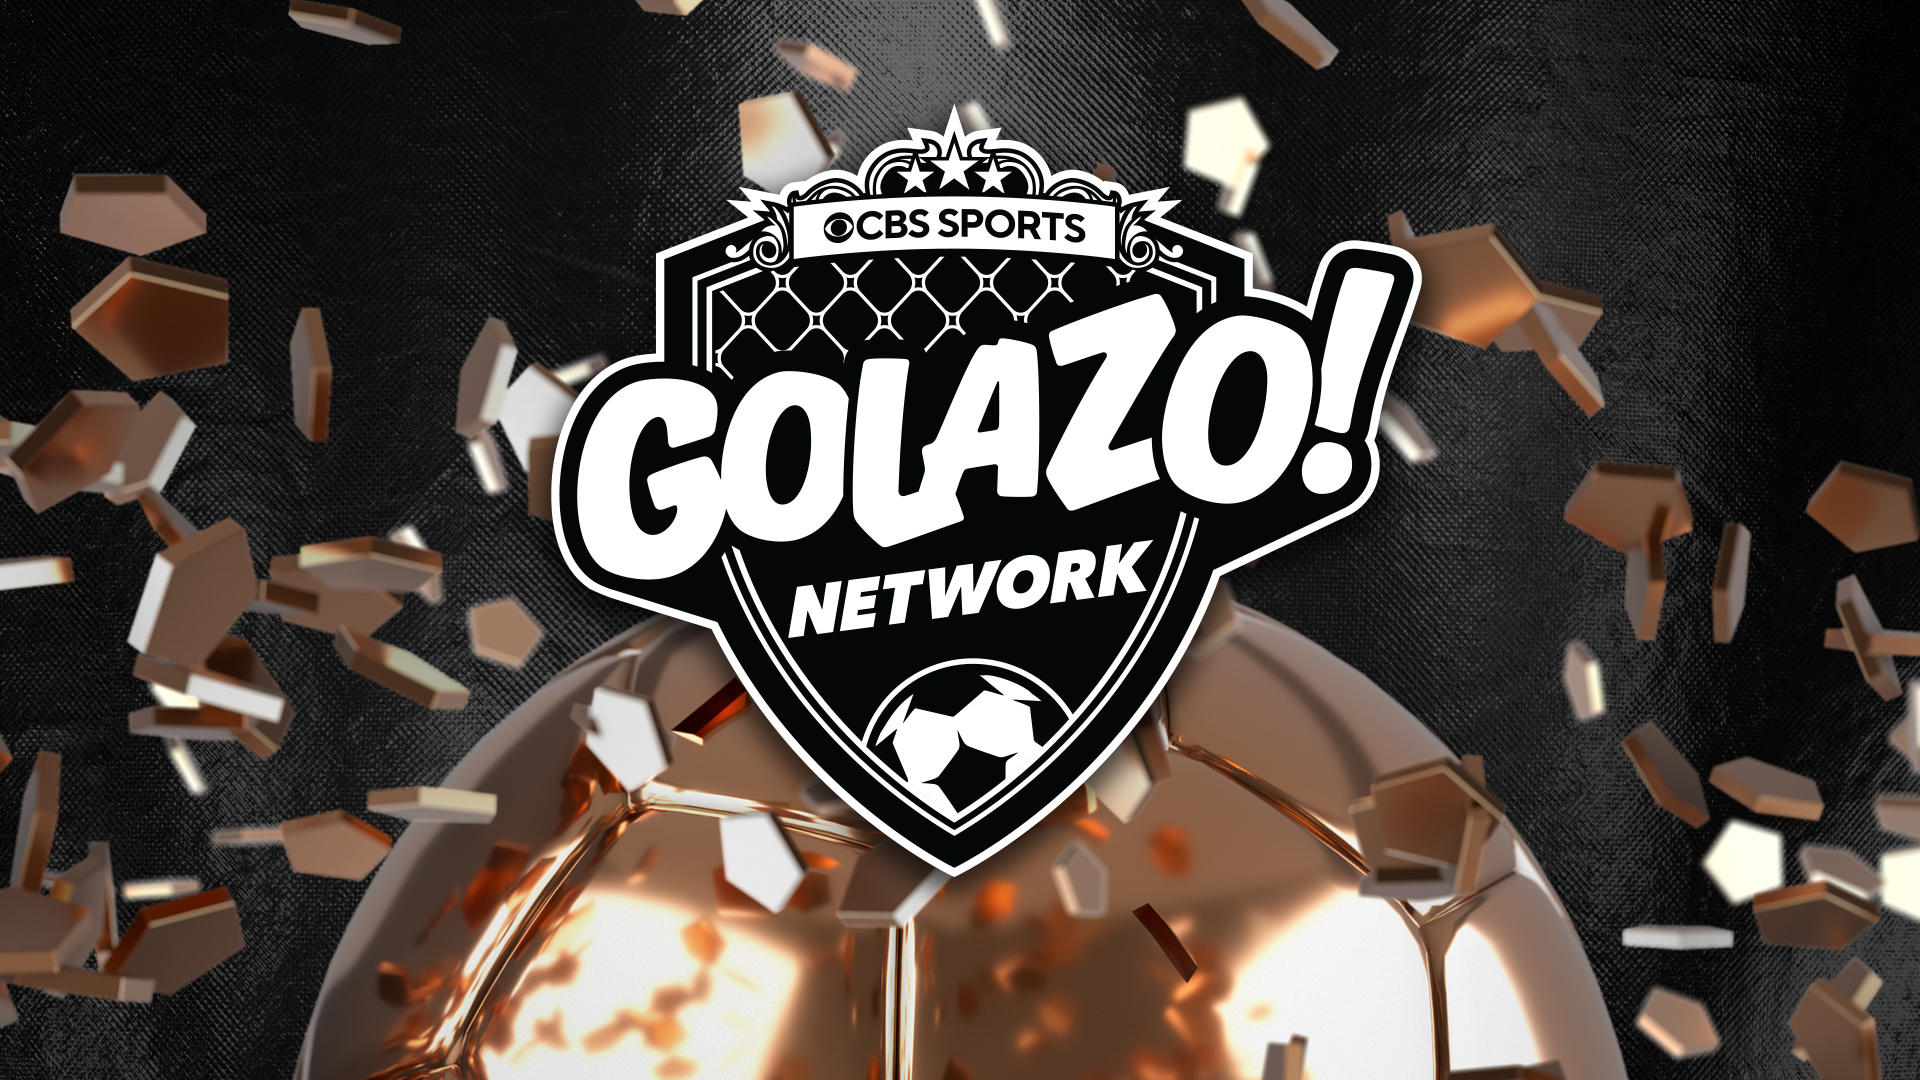 CBS Sports Golazo Network